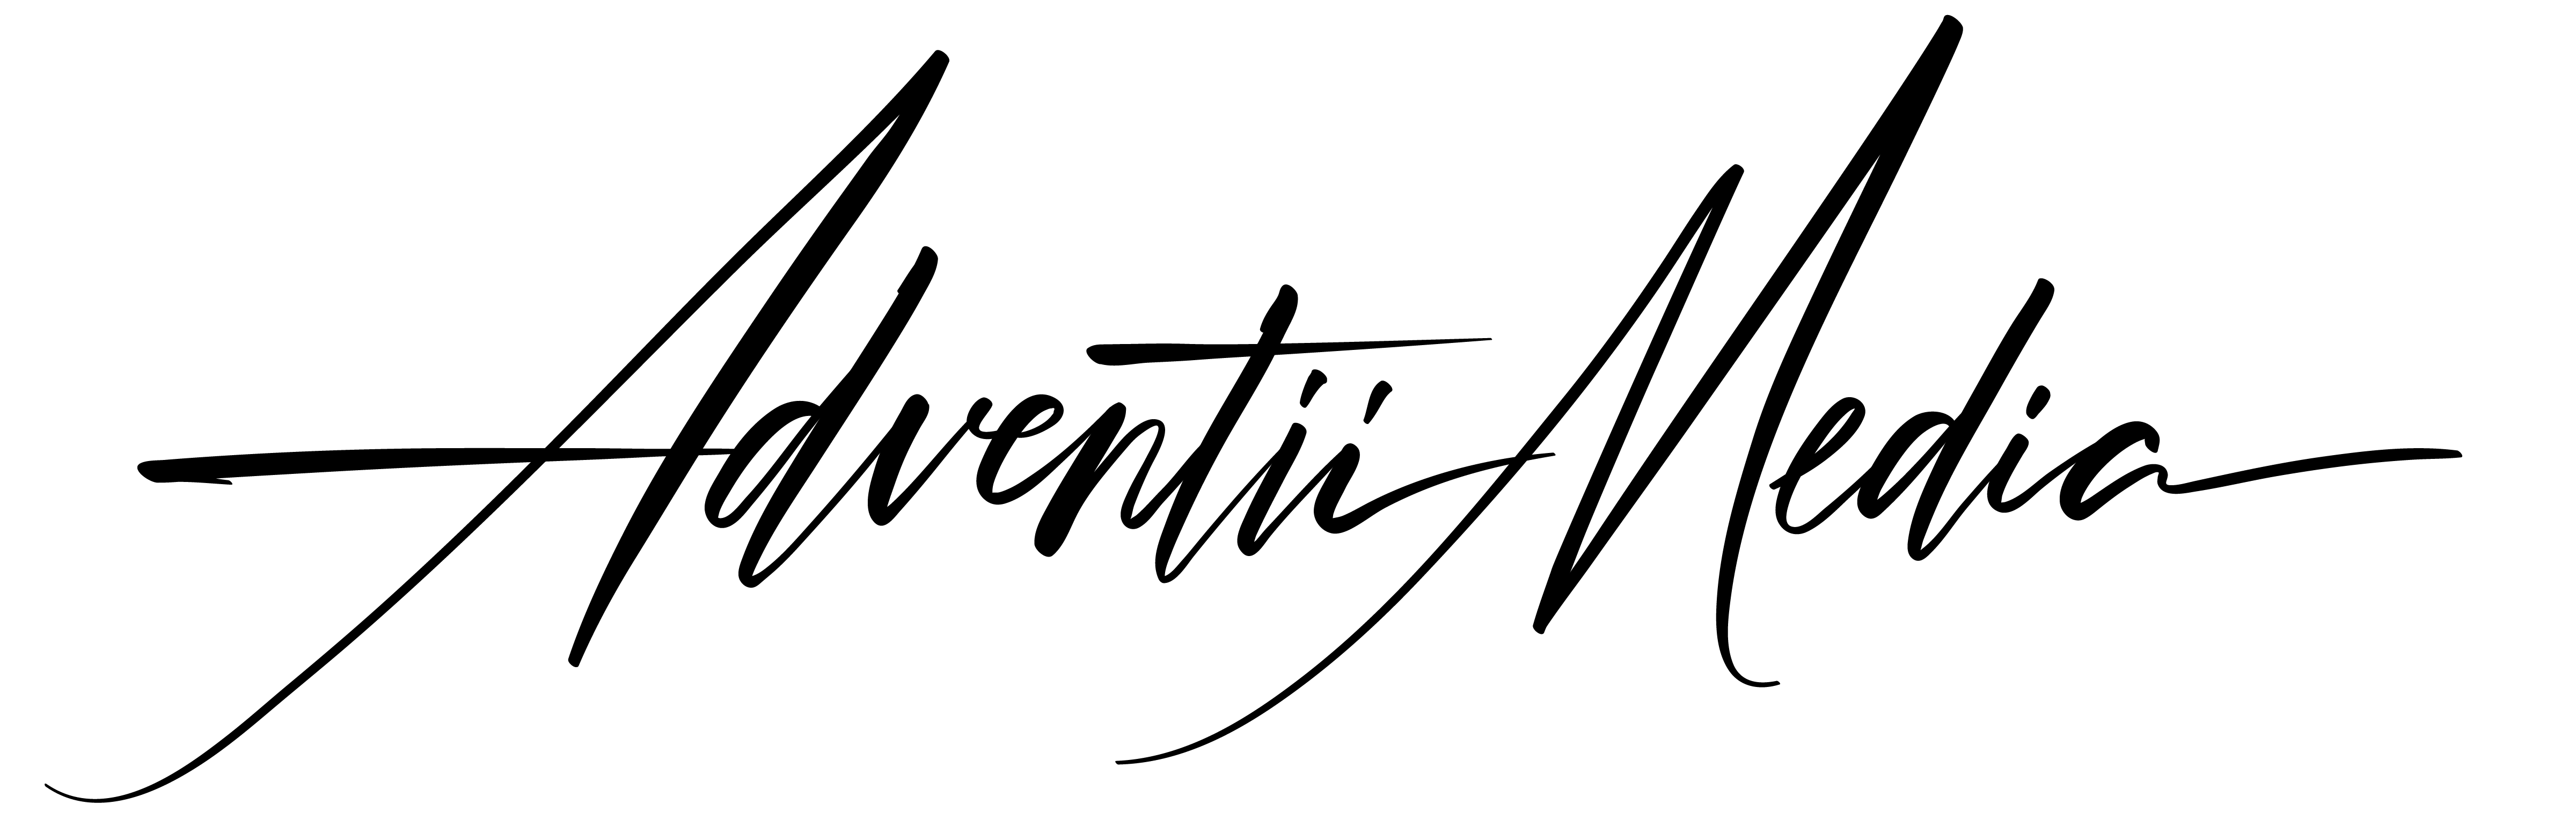 black-adventii-media-logo-new